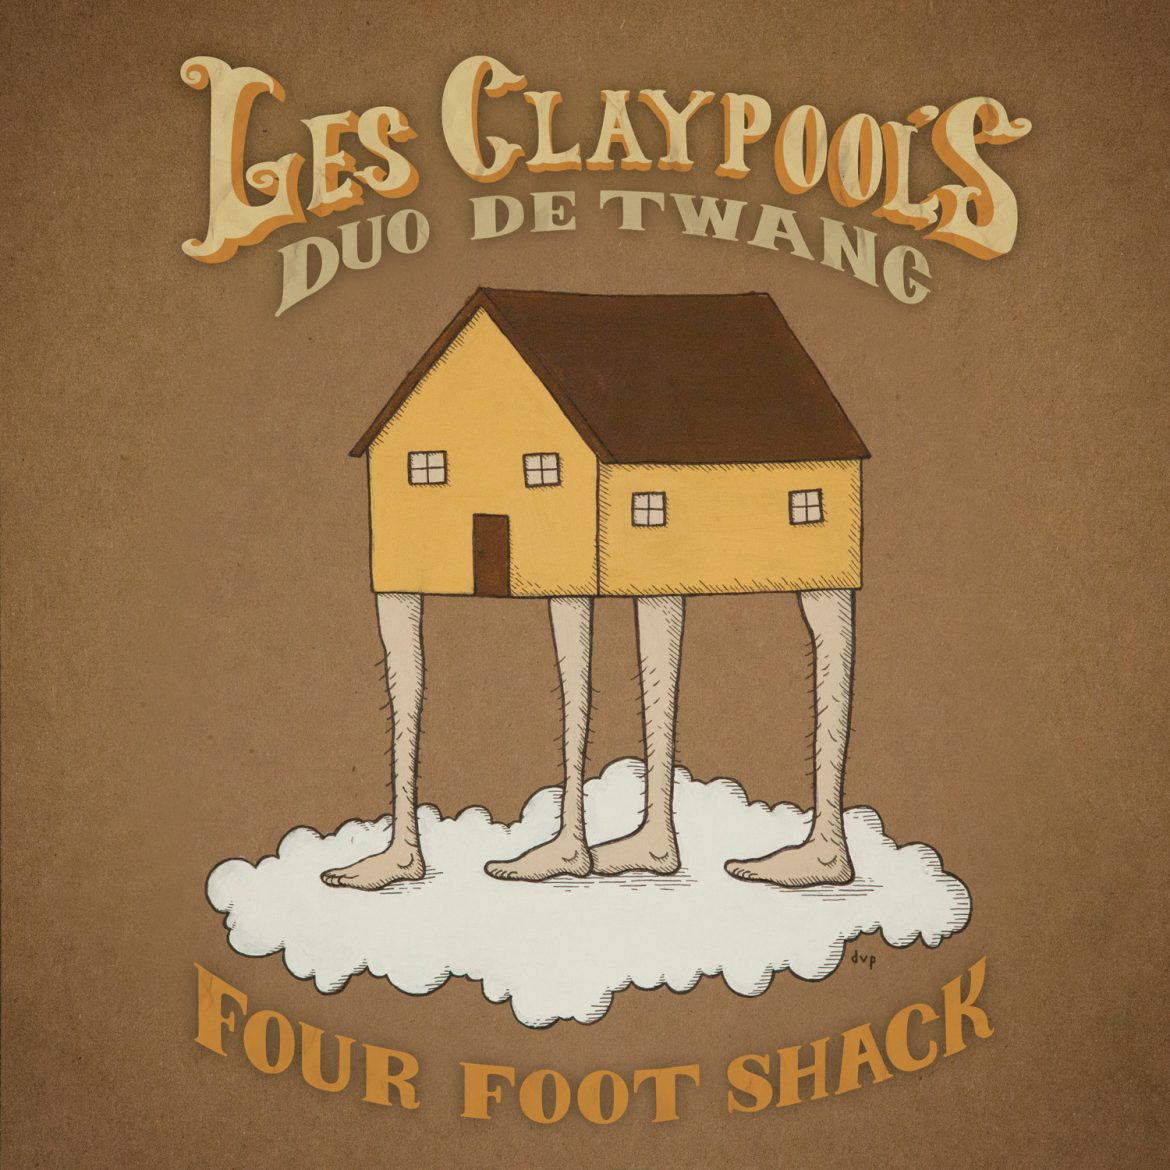 Les Claypool Duo de Twang “Four Foot Shack”, nuevo disco